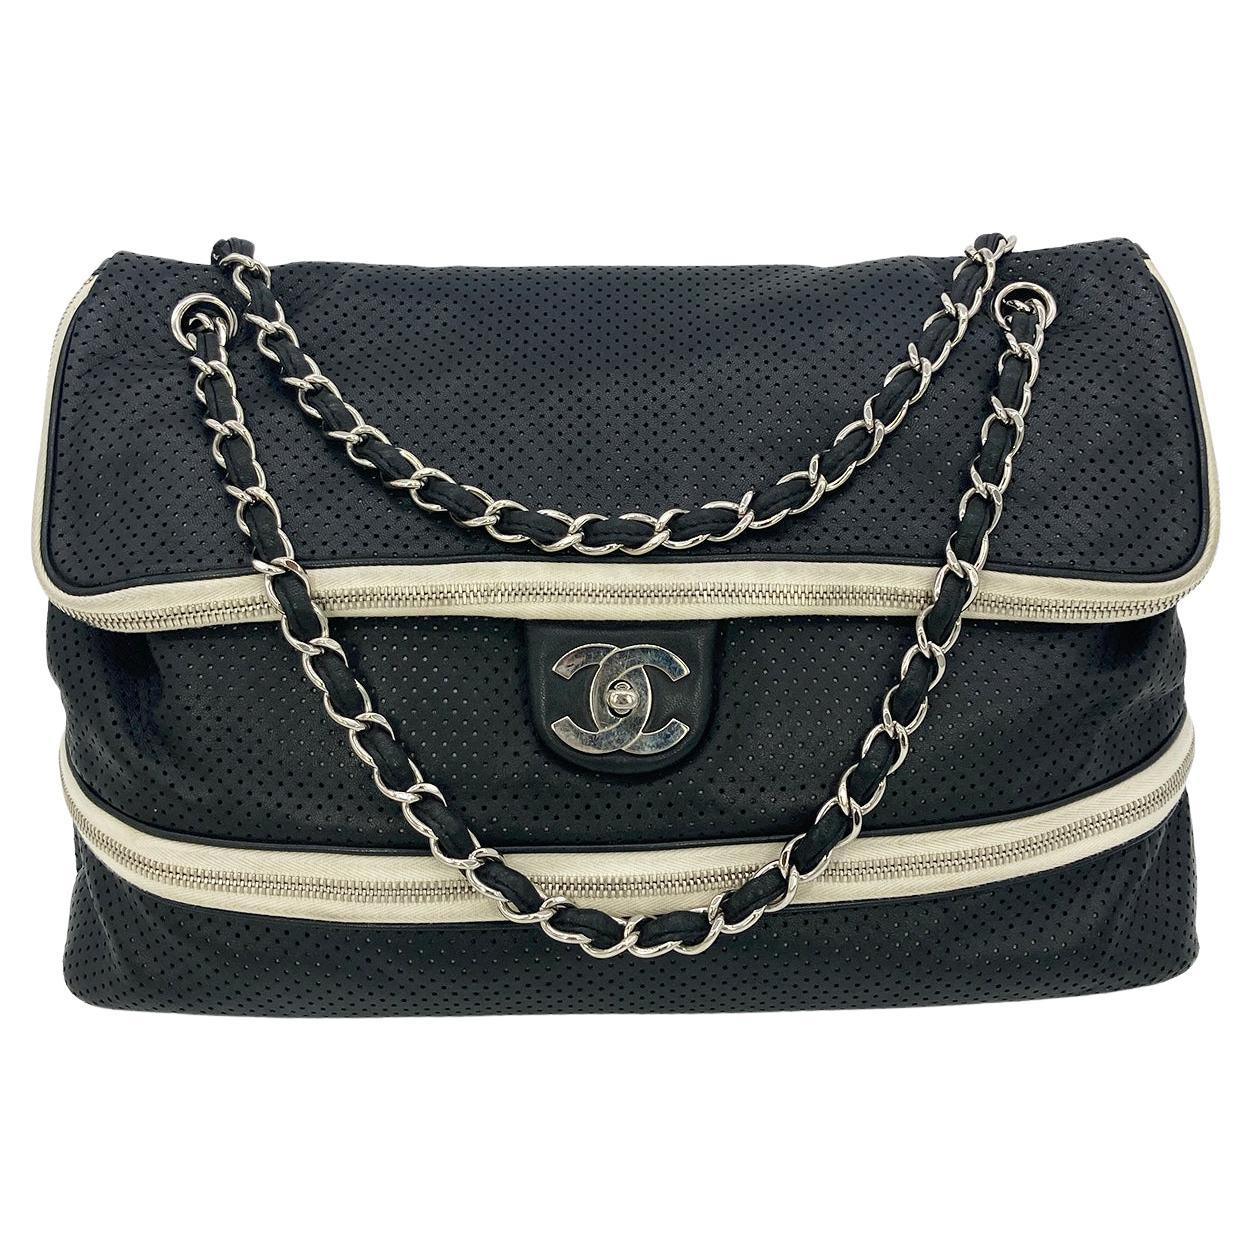 classic black chanel handbag new